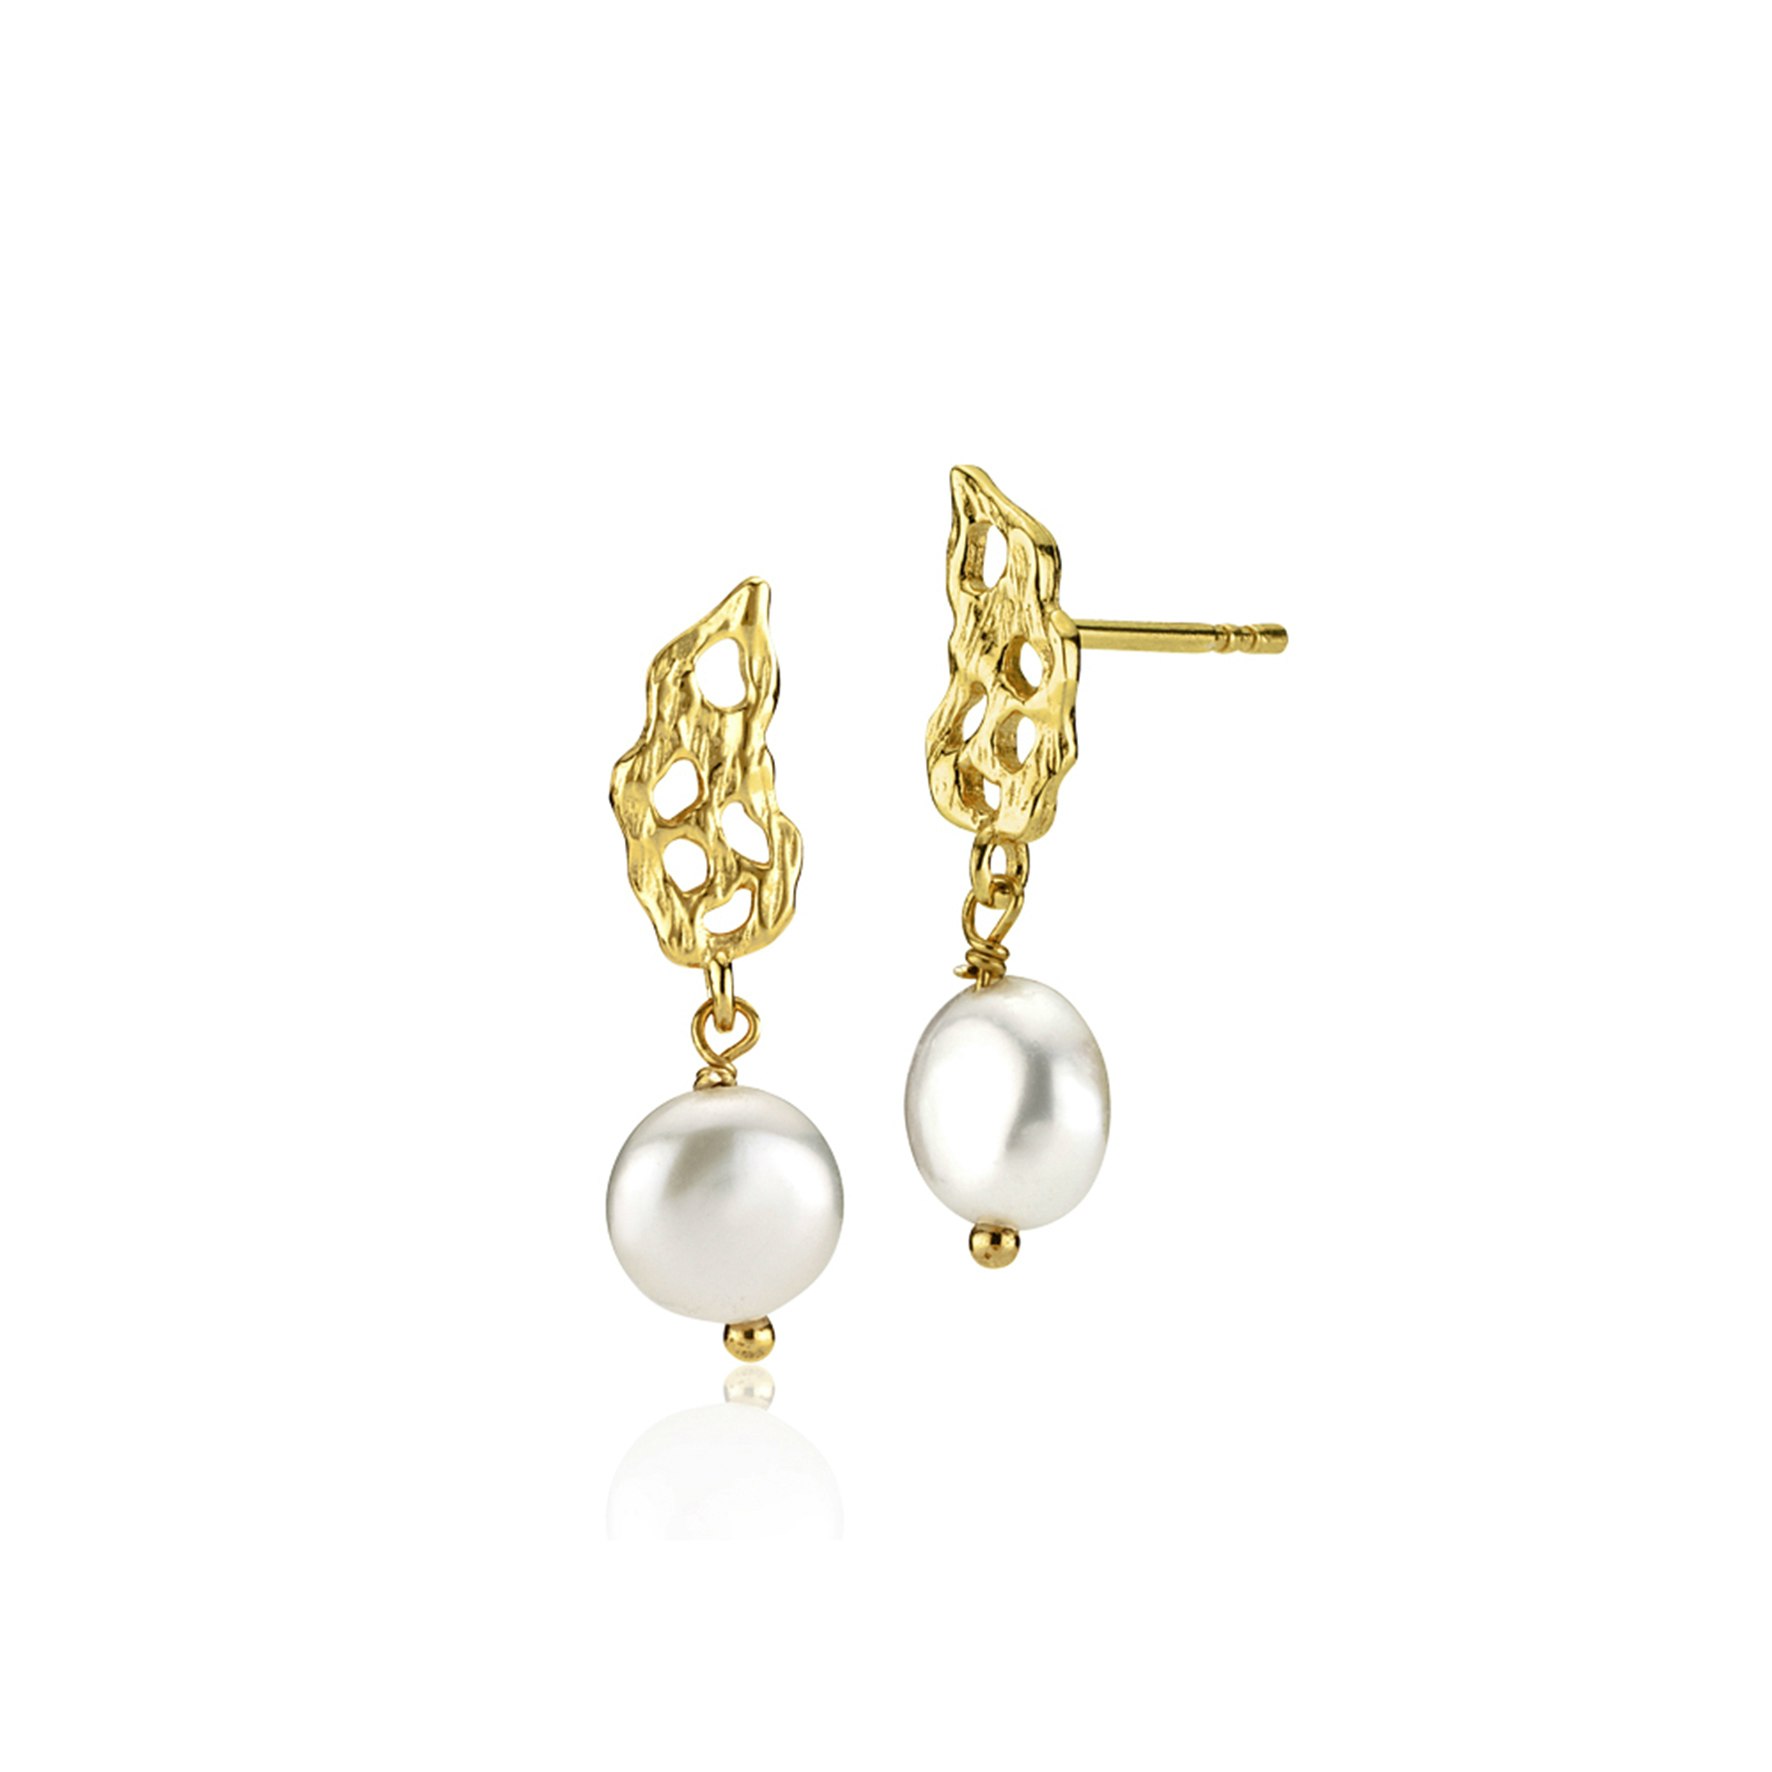 Holly Pearl Earrings von Izabel Camille in Vergoldet-Silber Sterling 925